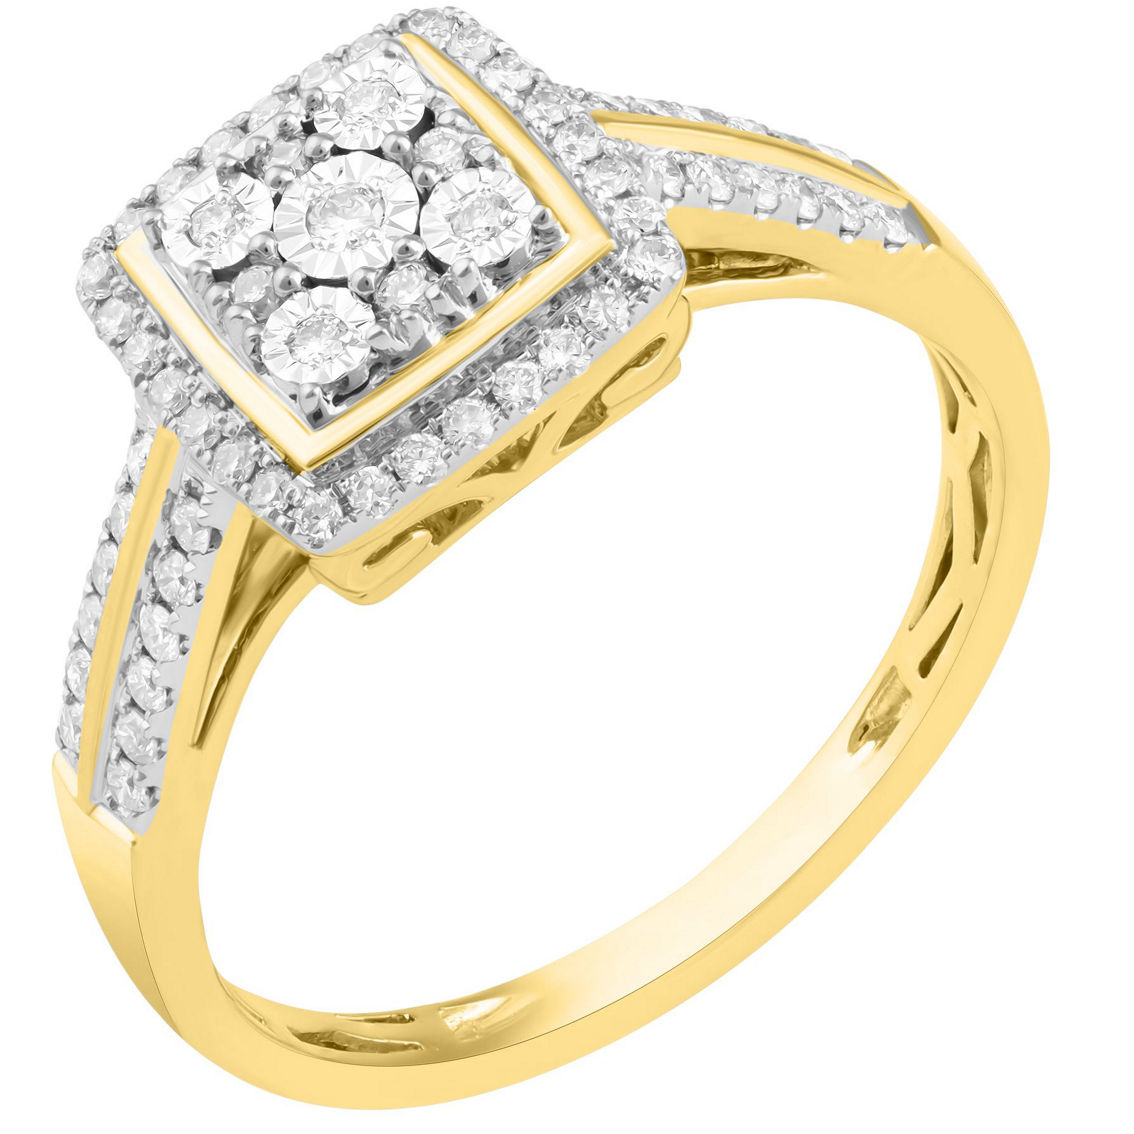 APMG 14K Yellow Gold 1/4 CTW Diamond Cushion Engagement Ring - Image 2 of 4